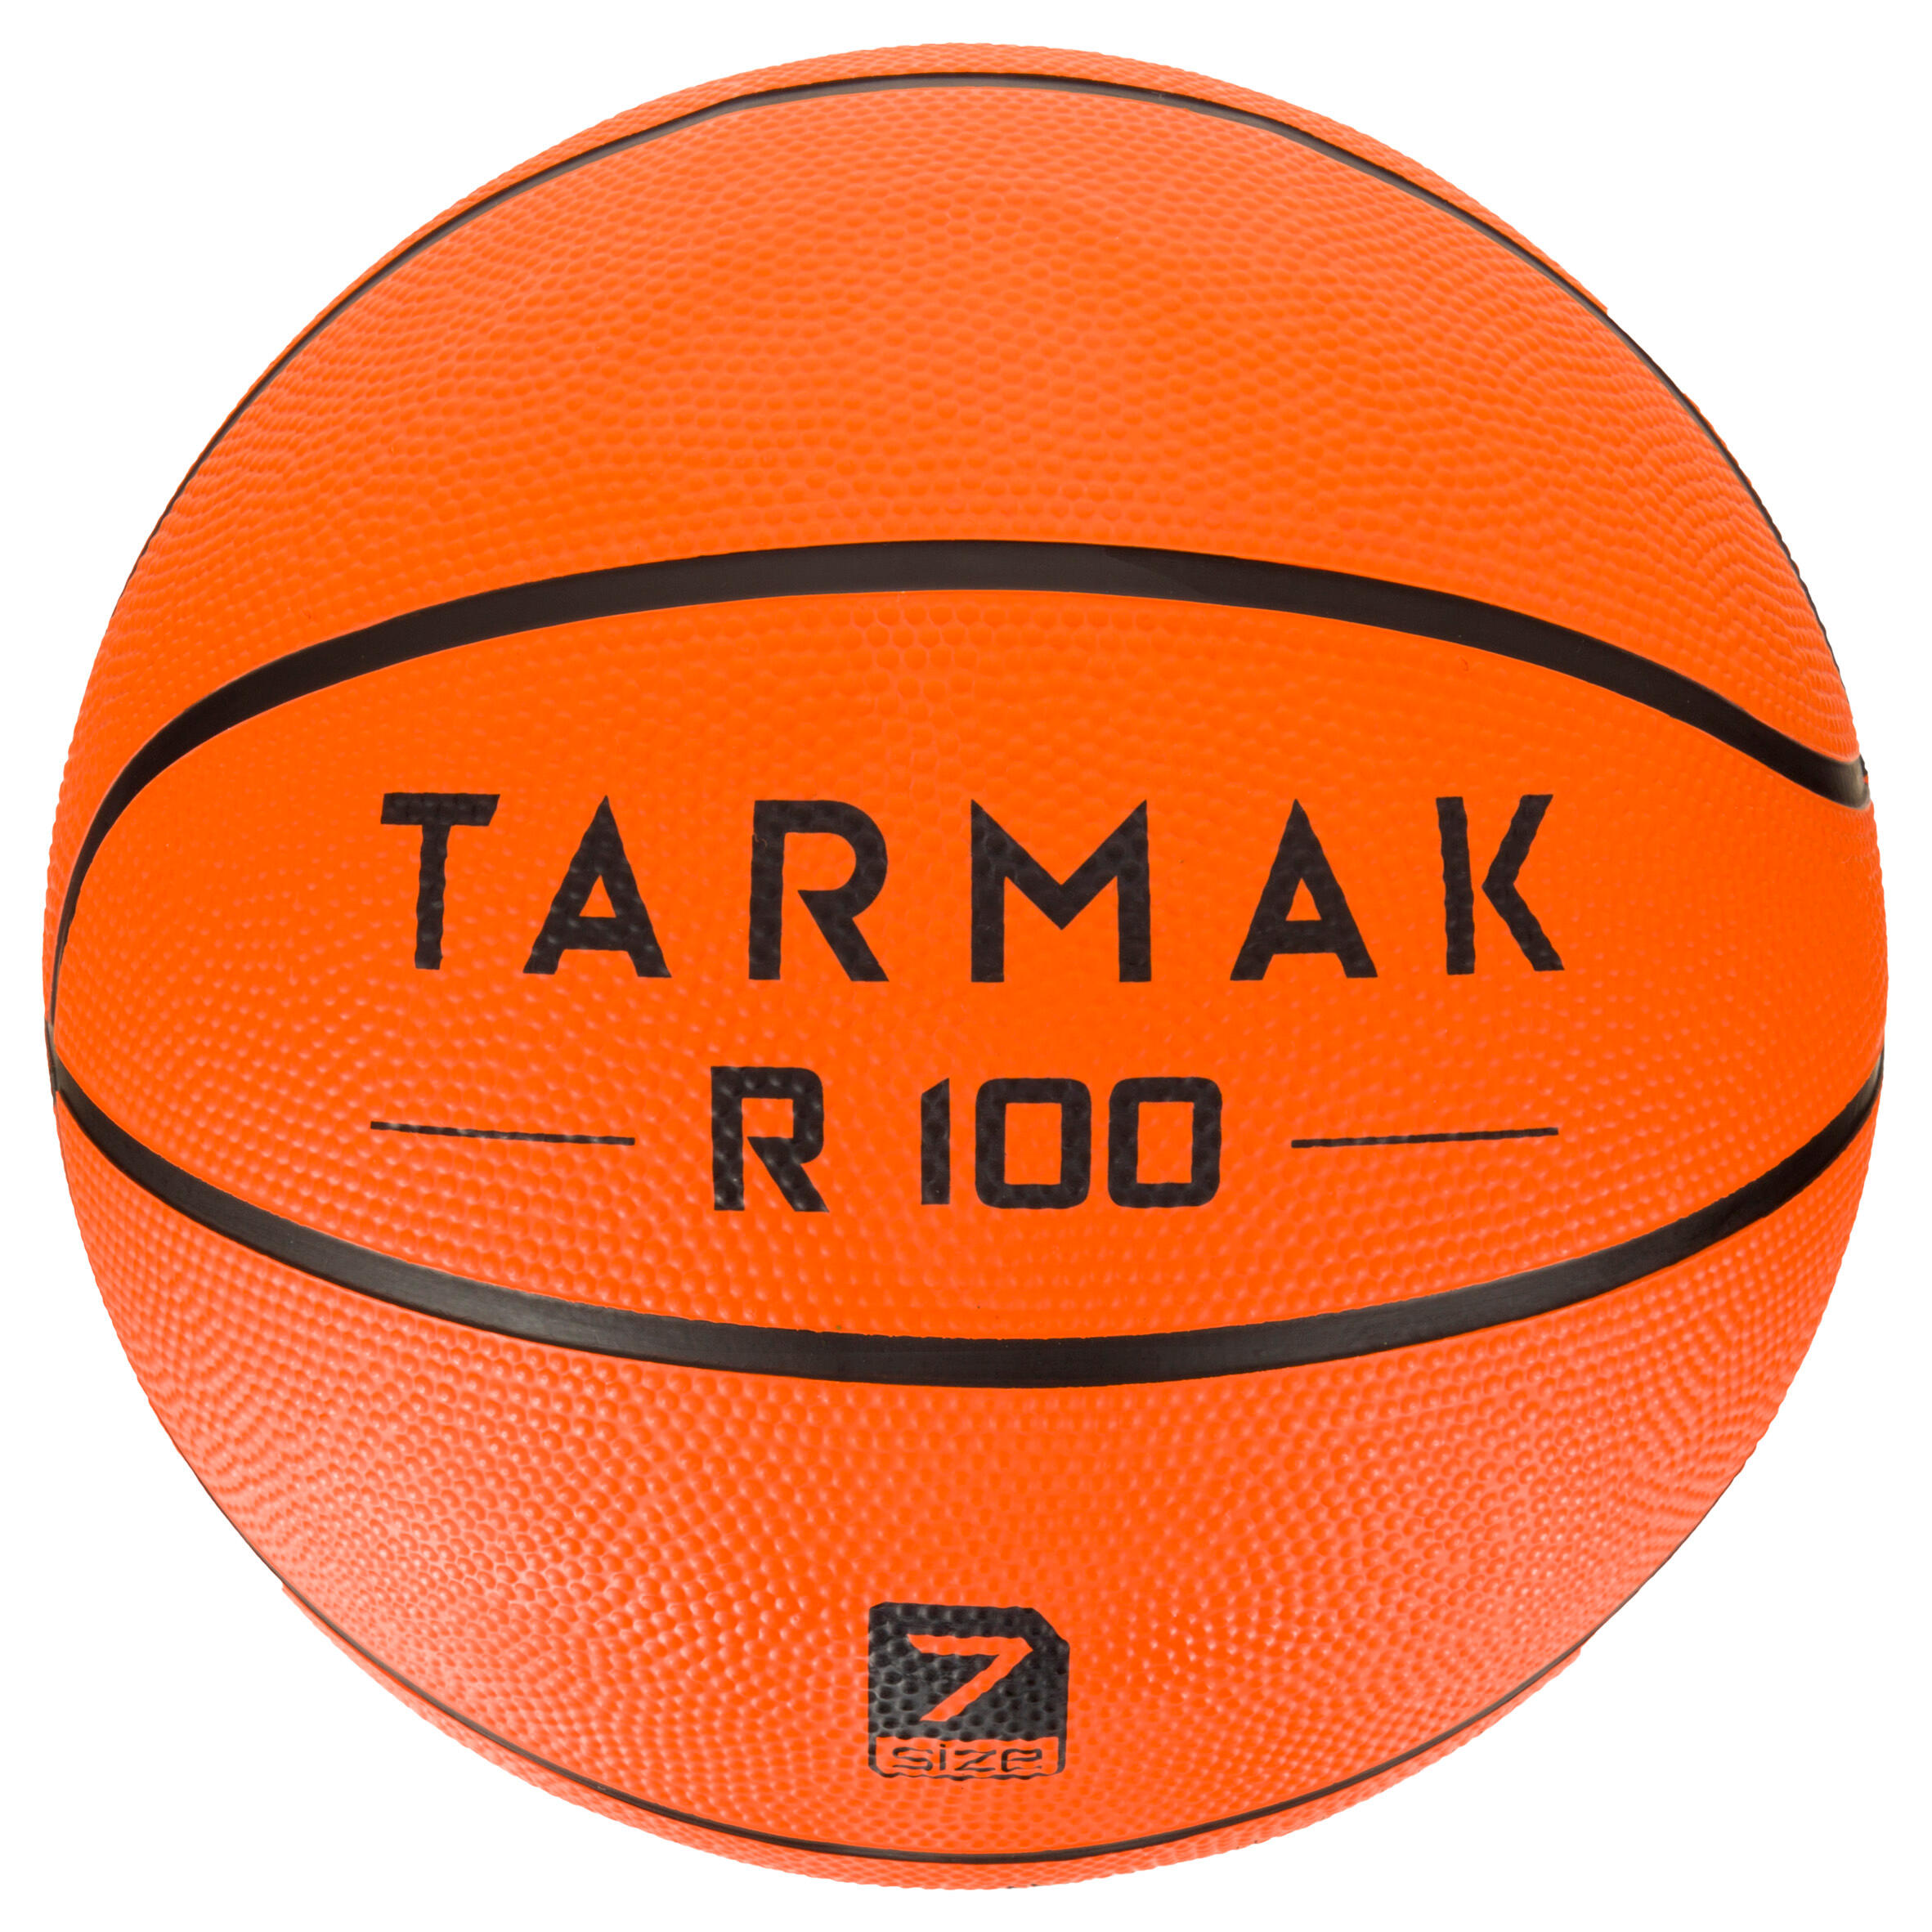 TARMAK R100 Adult Size 7 Basketball 